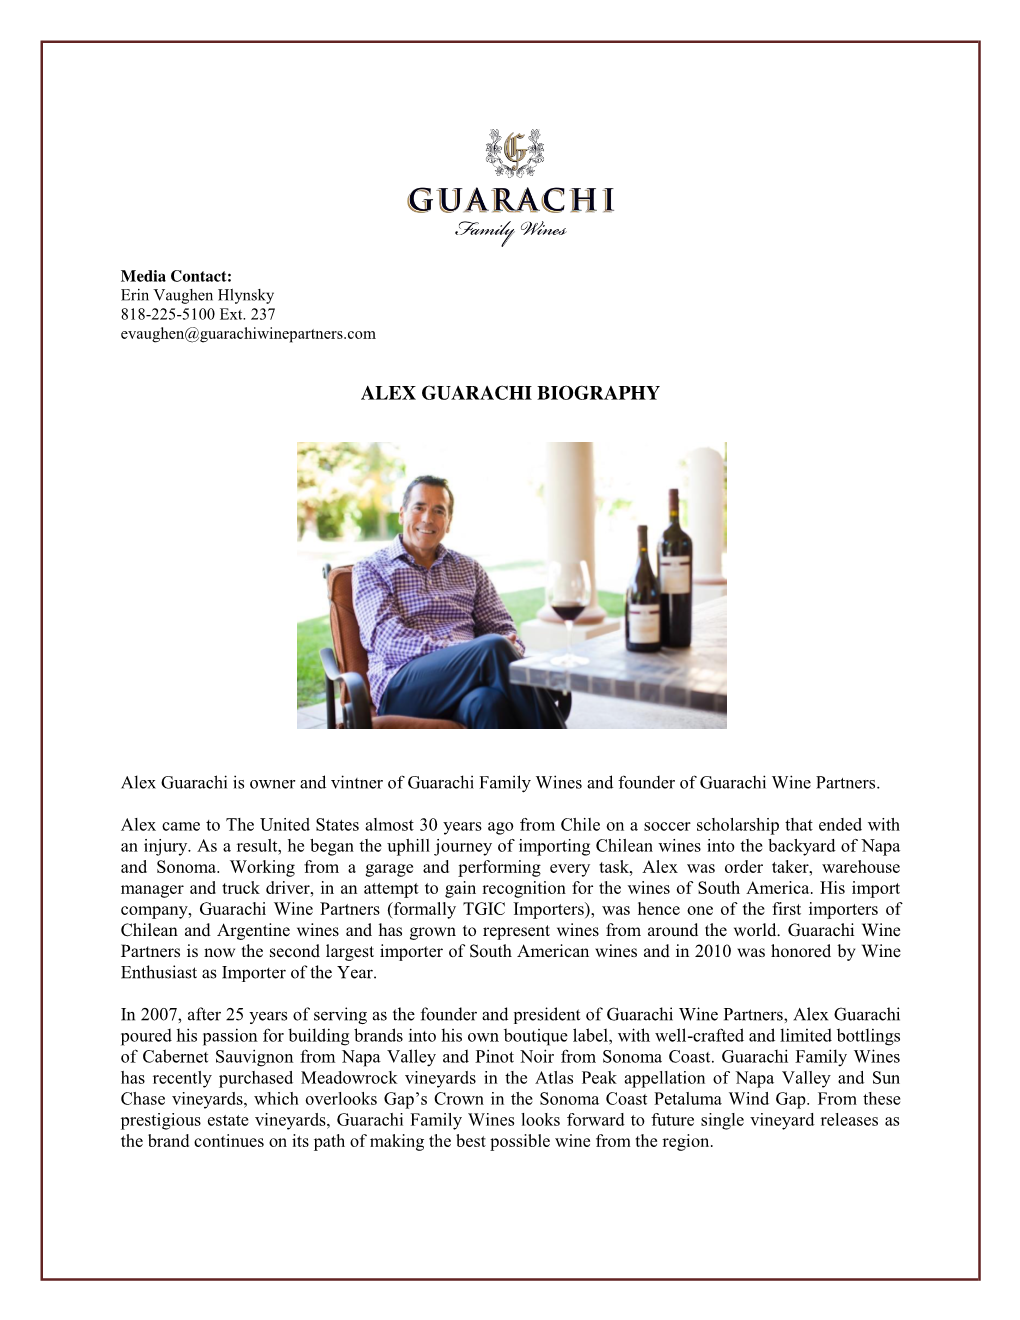 Alex Guarachi Biography